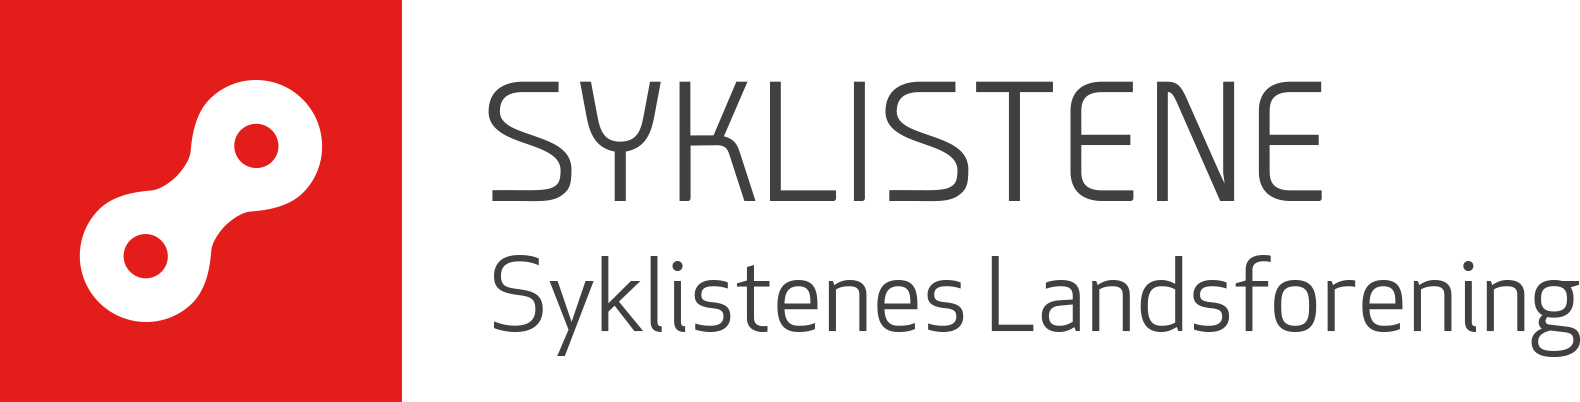 syklisteneslandsforening logo